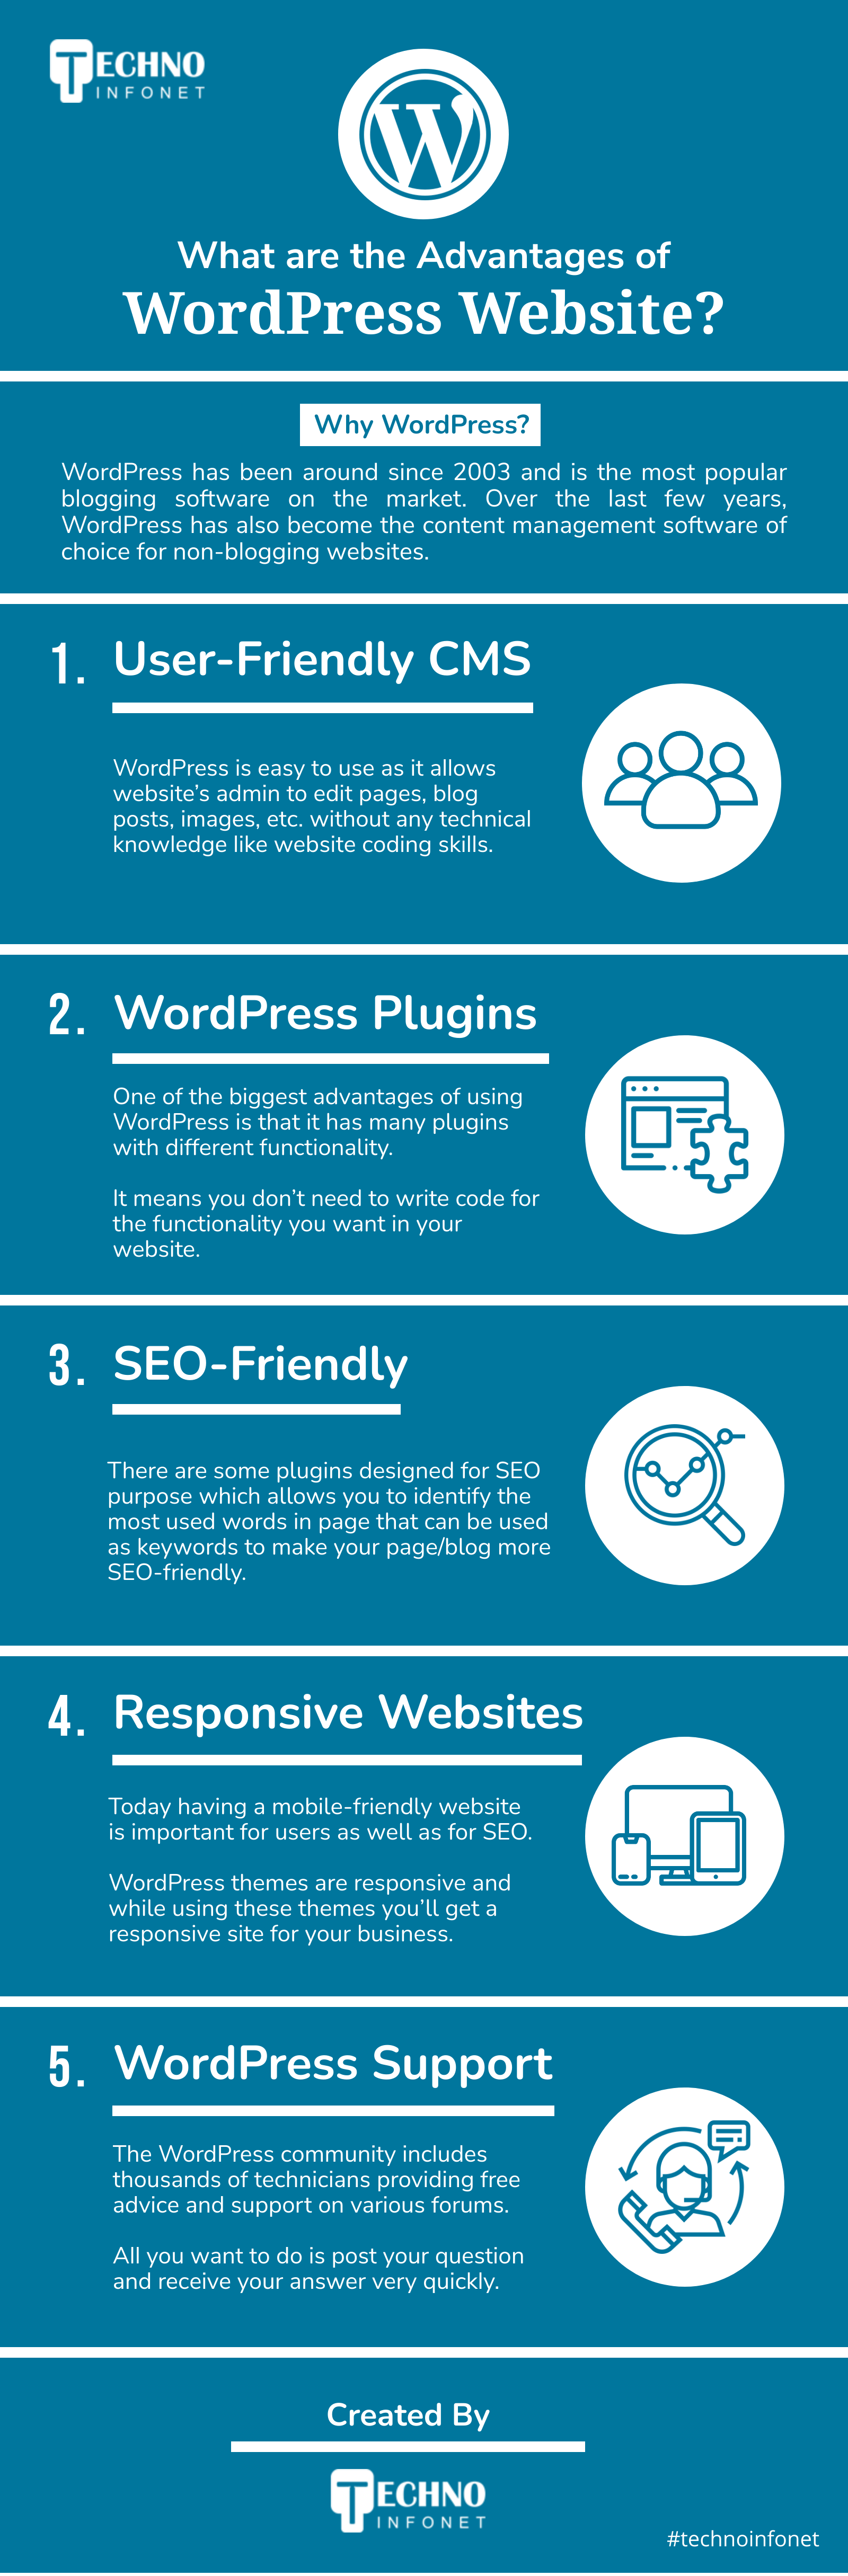 Advantages of WordPress Website Infographic